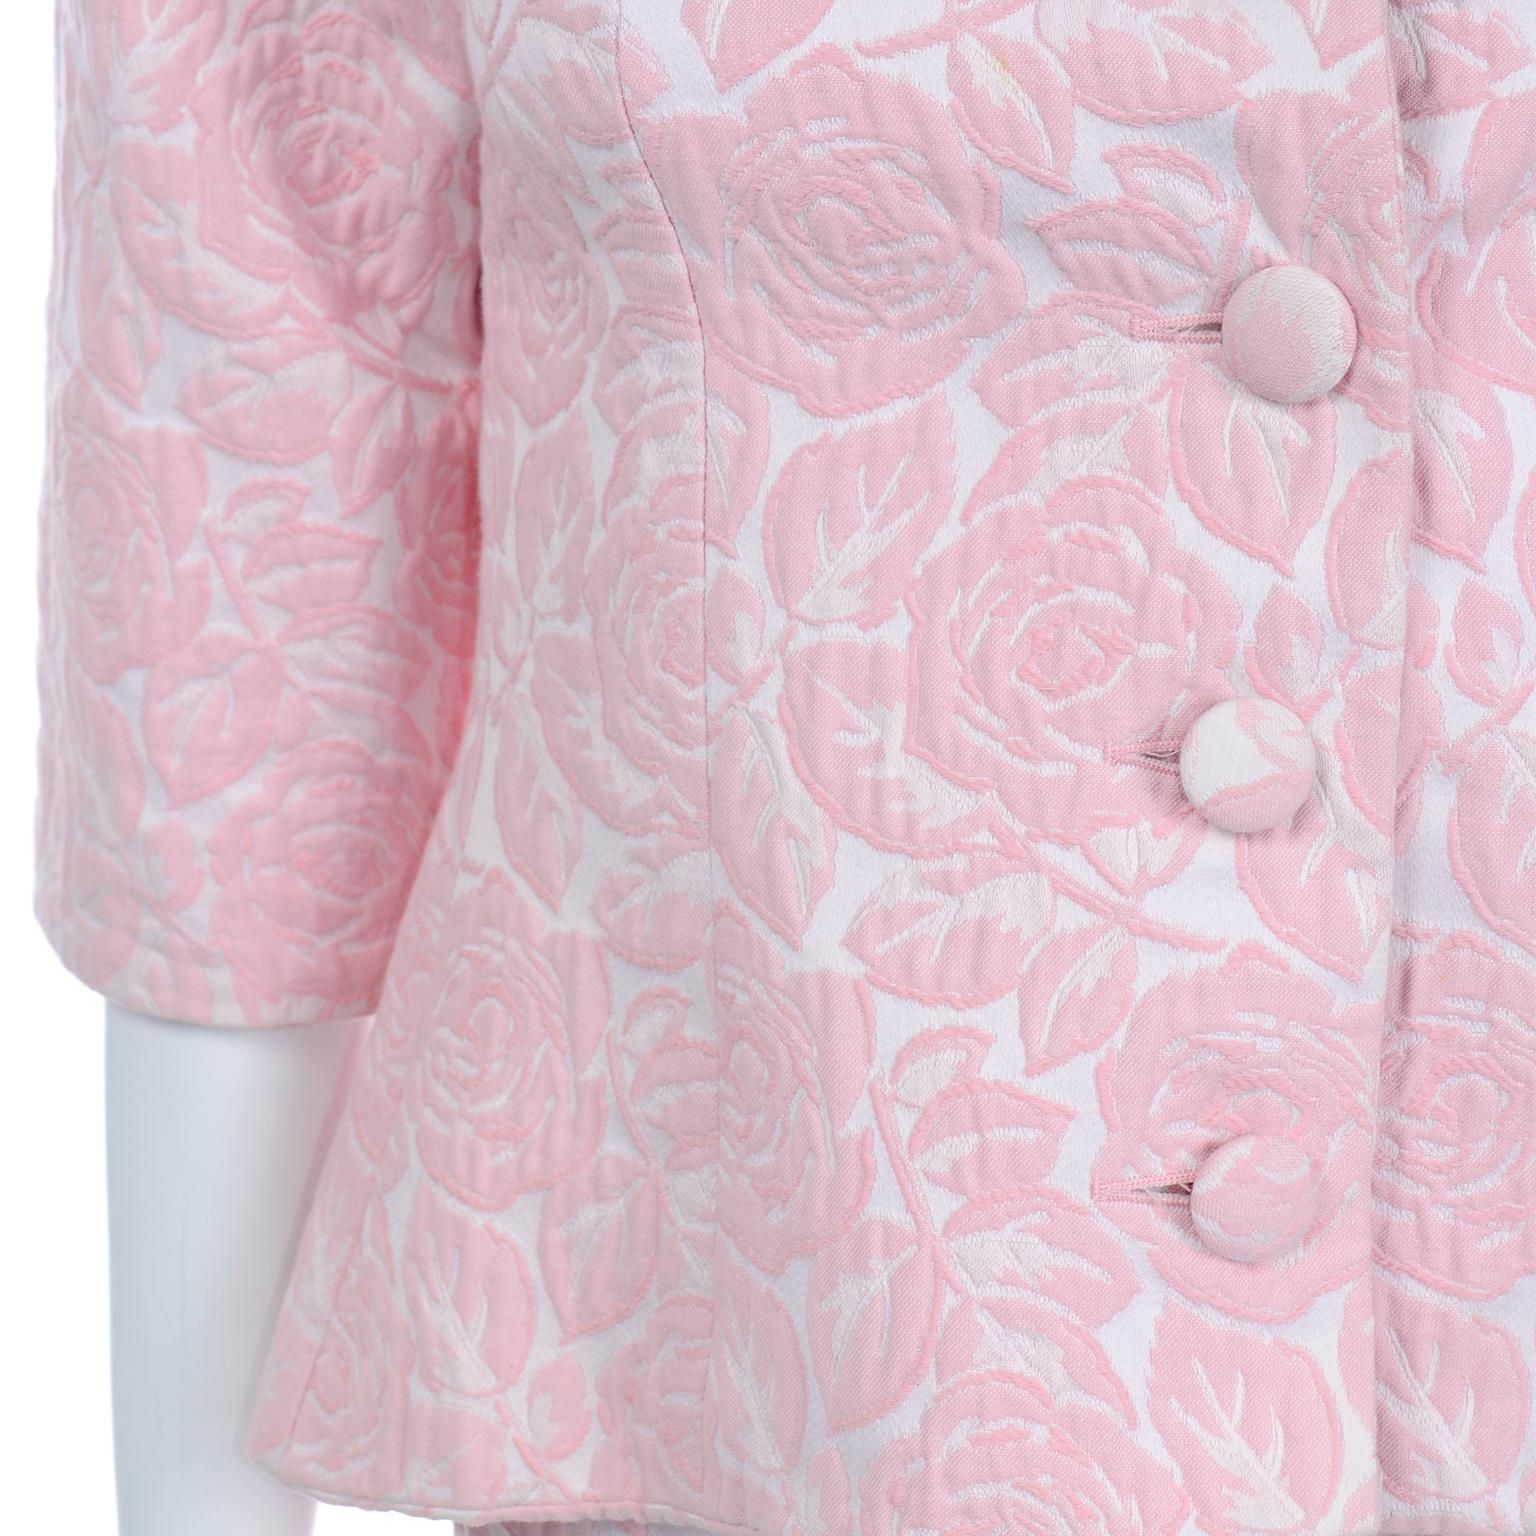 Guy Laroche Boutique Paris Vintage Pink Skirt Suit With Bow For Sale 1